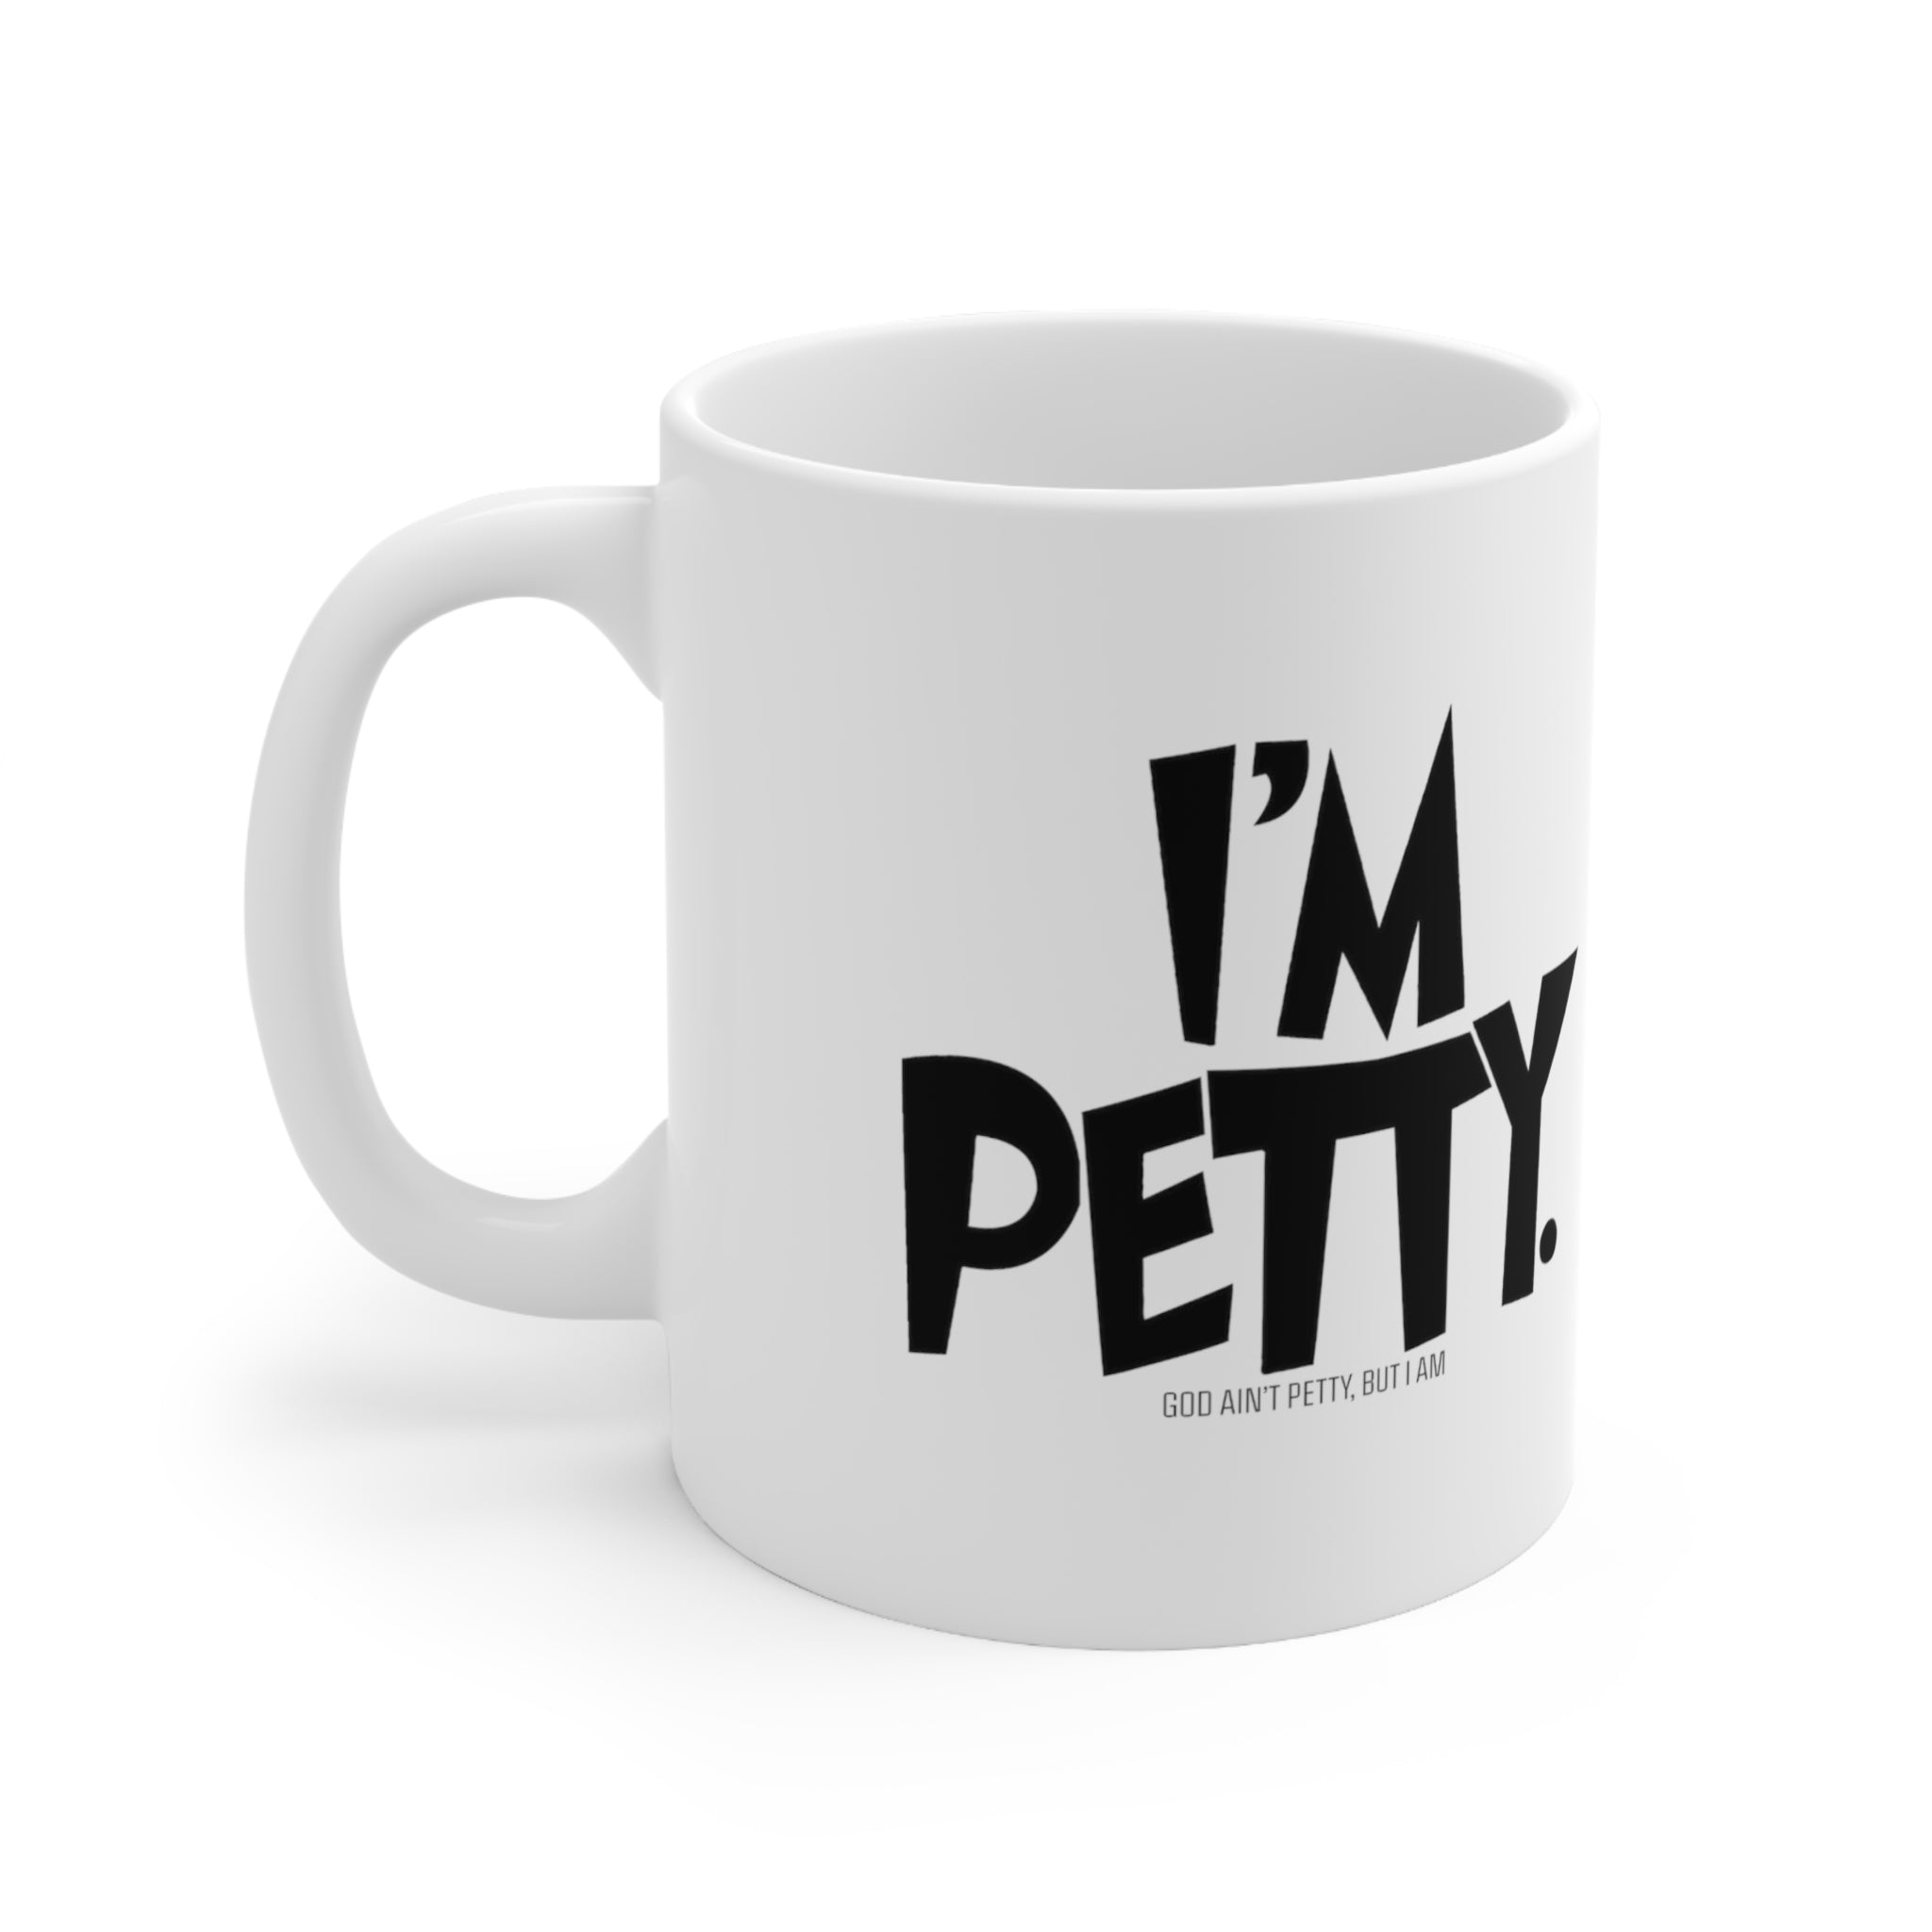 I'm Petty Mug 11oz (White & Black )-Mug-The Original God Ain't Petty But I Am